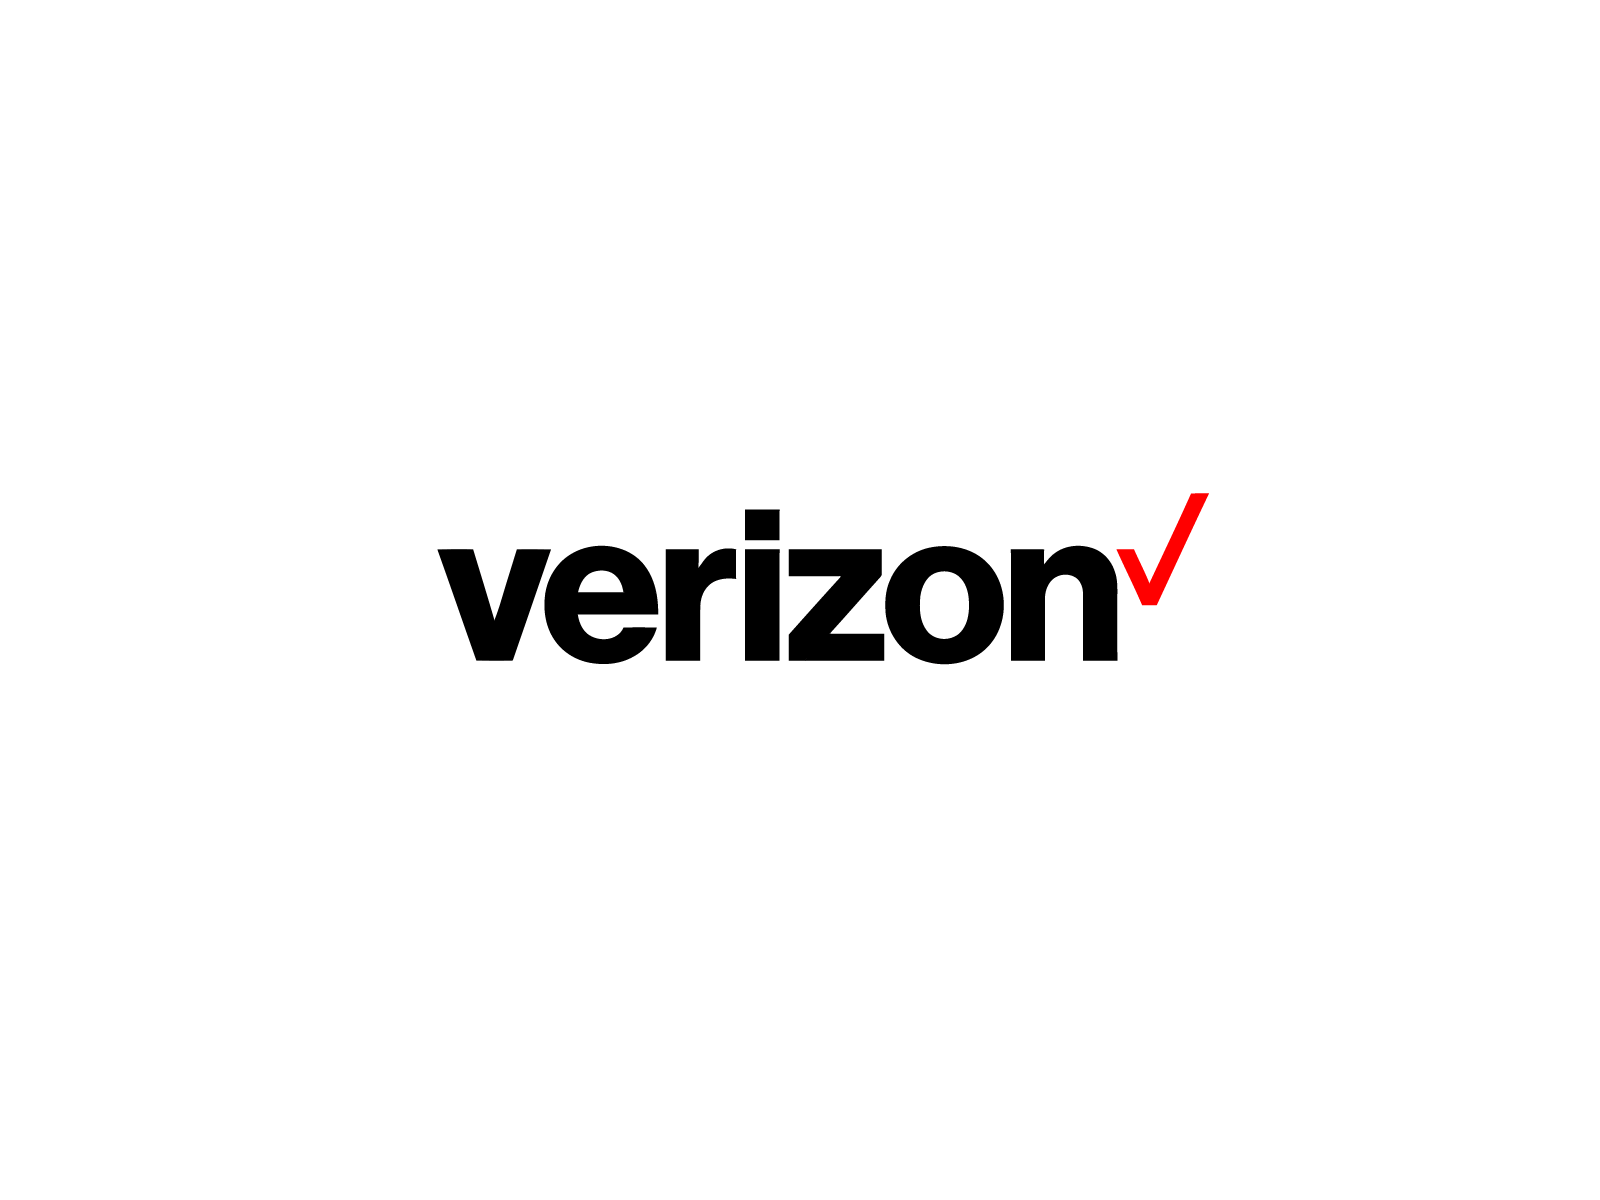 Verizon Logo Animation